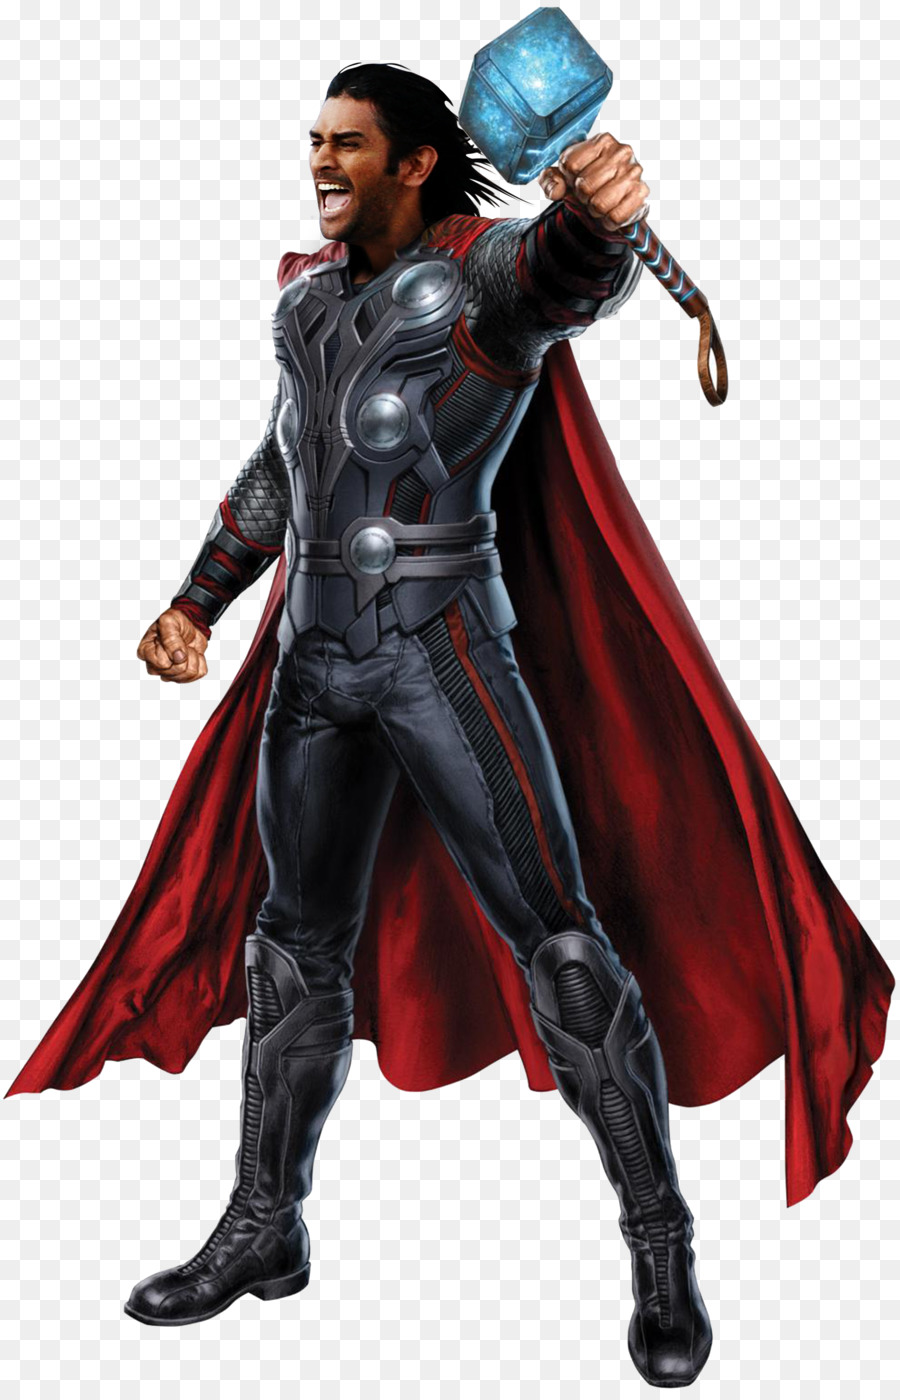 Thor Iron Man Loki Odin Laufey - Hawkeye png download - 2439*3780 - Free Transparent Thor png Download.